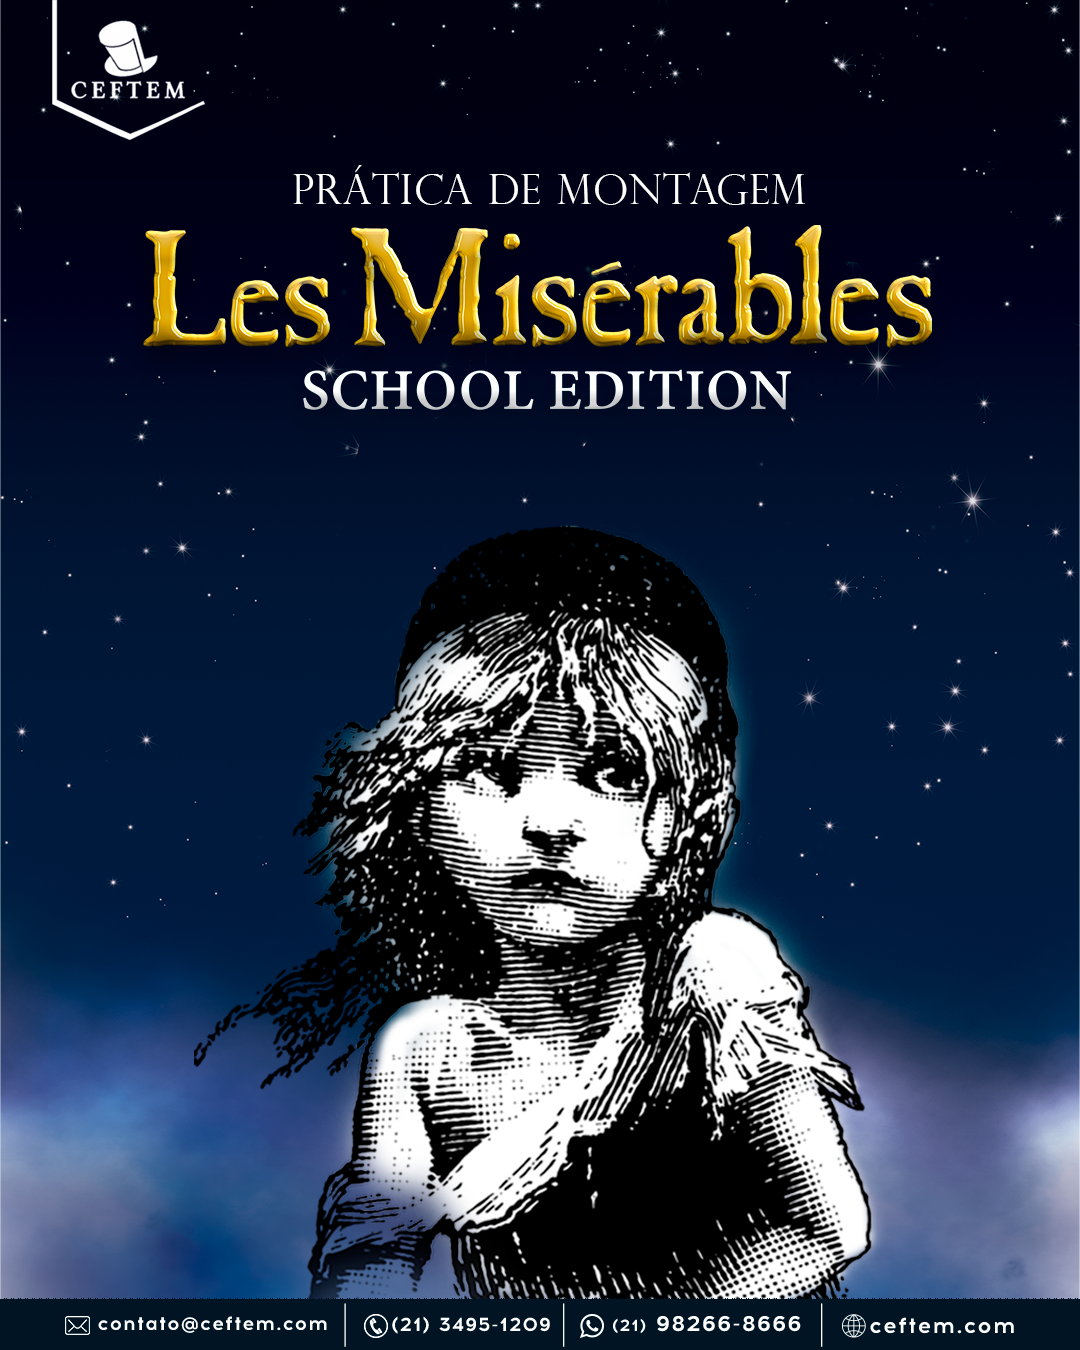 Imagem para curso de Les Miserábles - School Edition